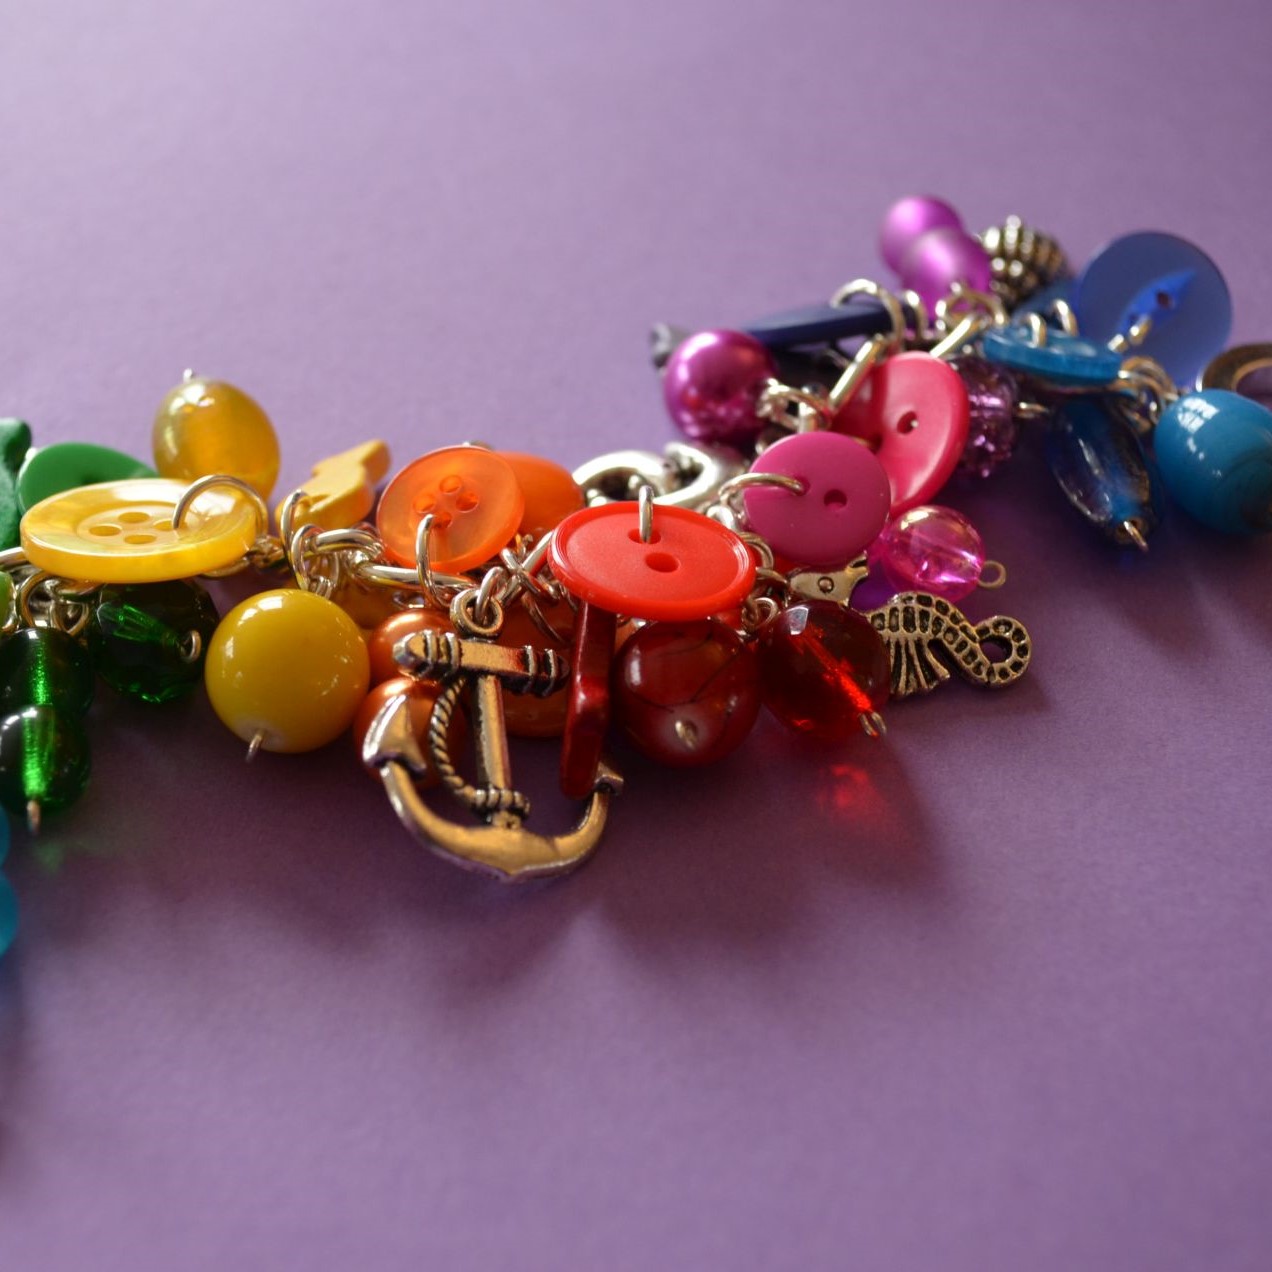 Button, Bead & Nautical themed Charm Bracelet